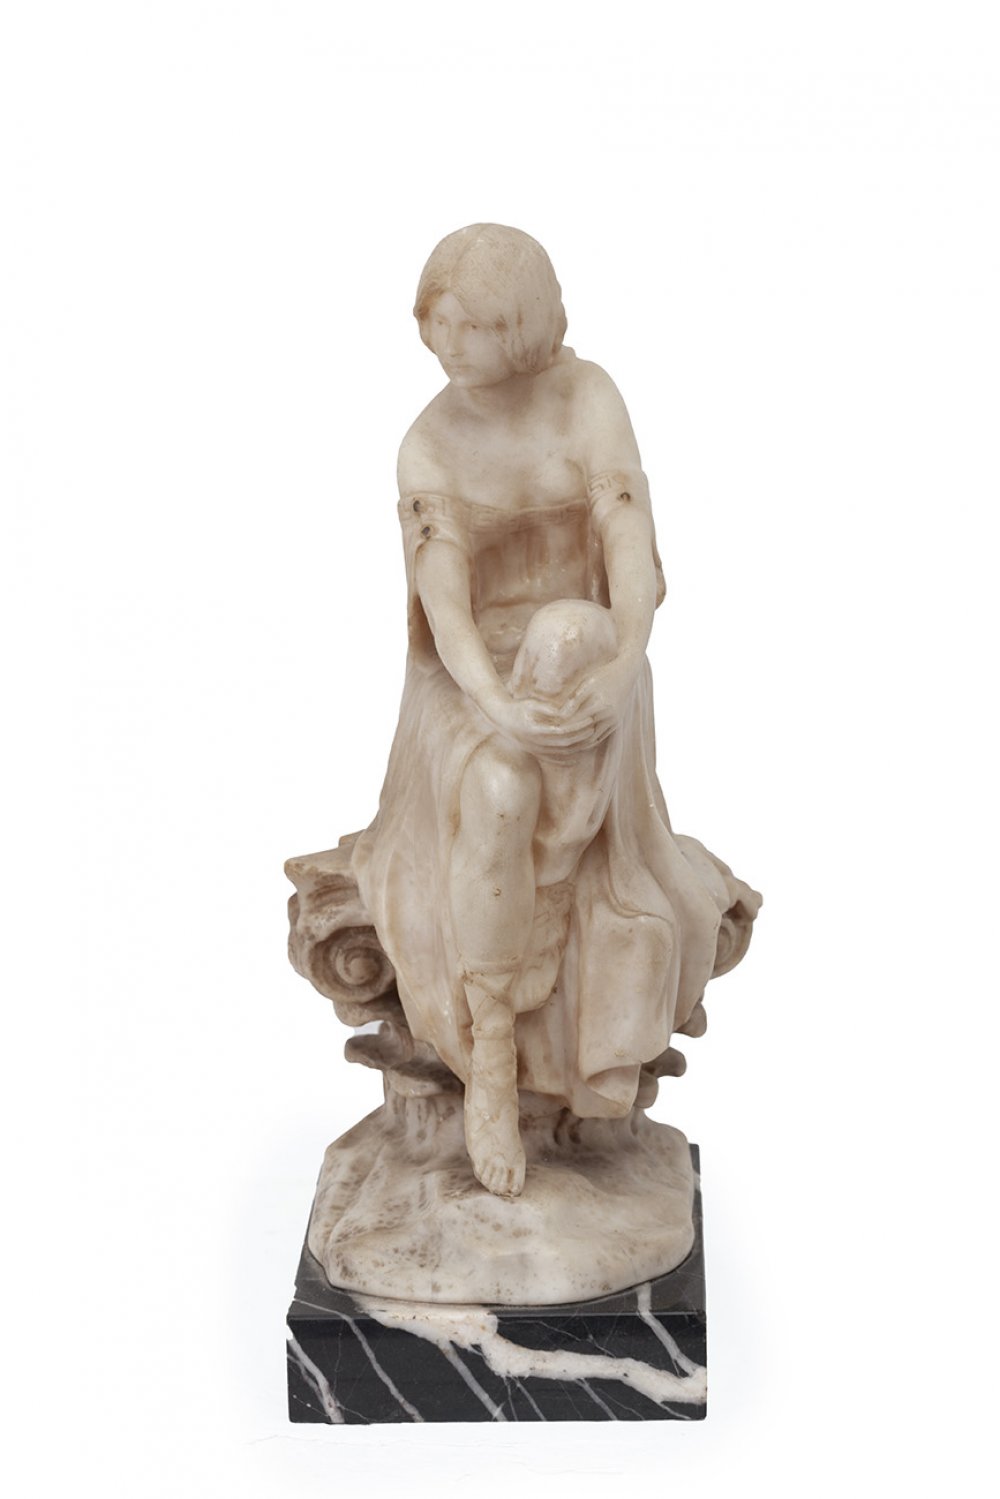 RUDOLF MARCUSE (Berlin, 1878 - London, 1929)."Junge Griechin, (1905).Sculpture in alabaster.Signed